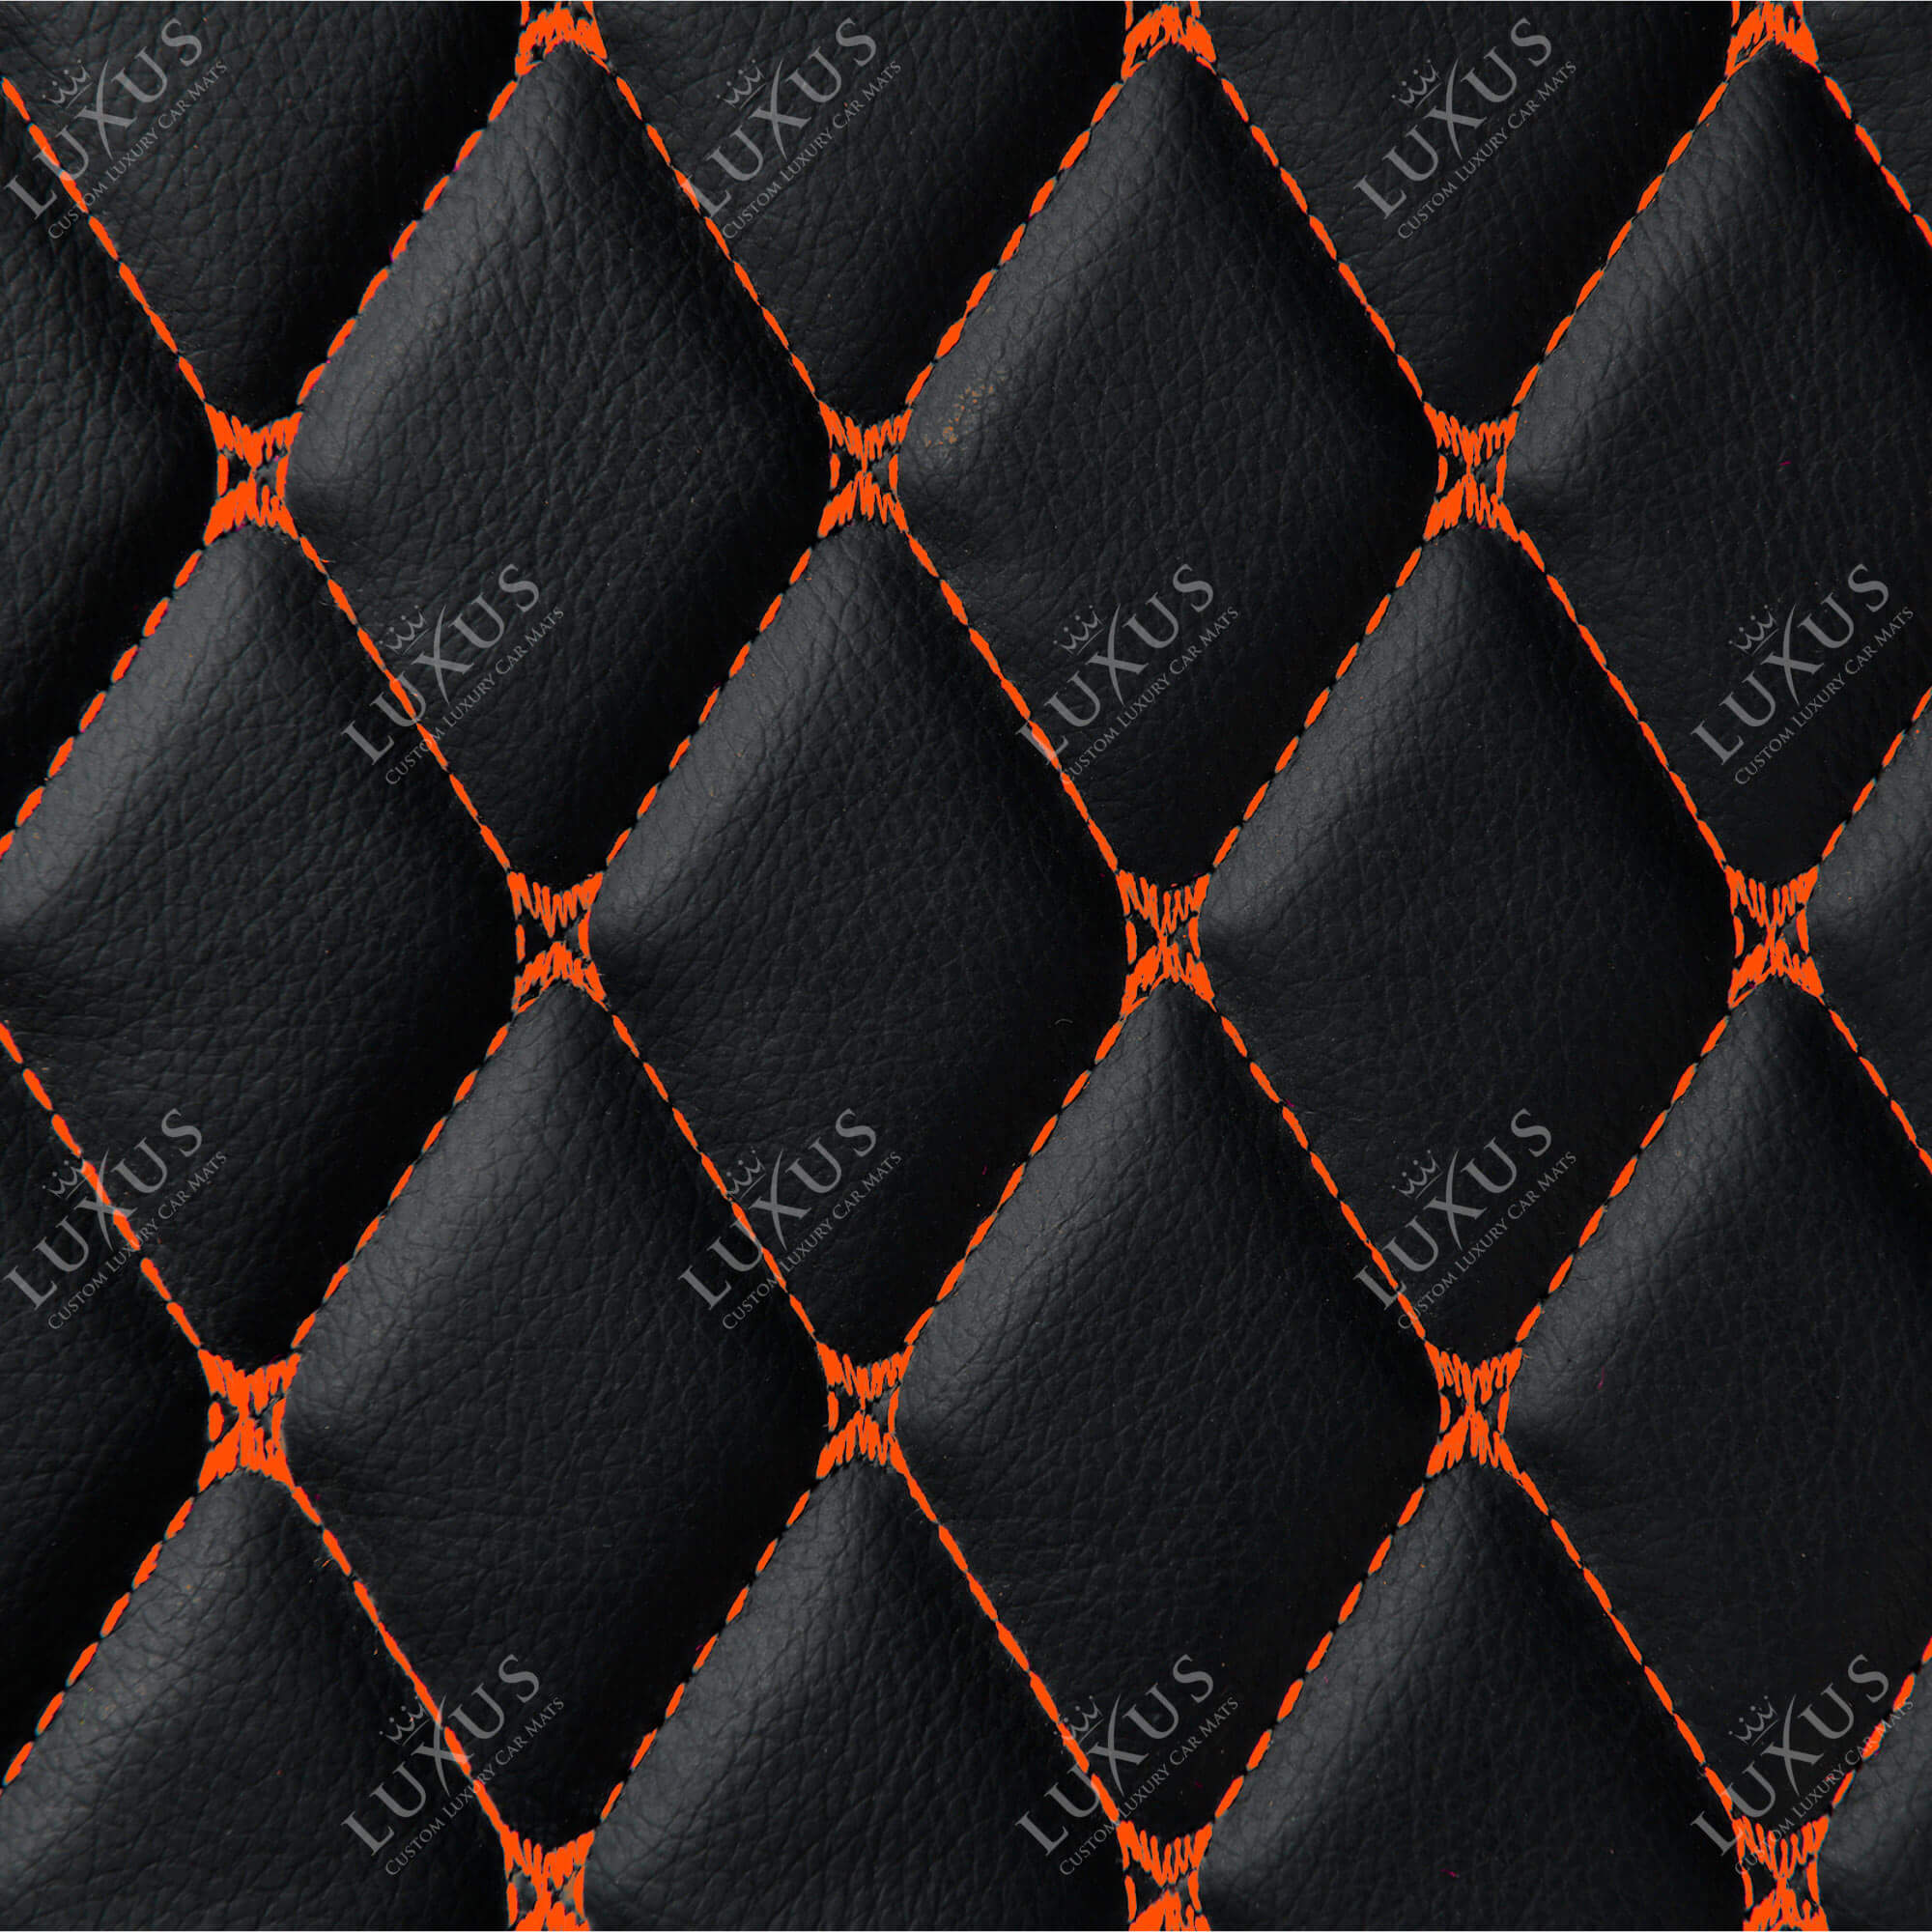 Luxus Car Mats™ - Zwart en oranje stiksel Luxe leren koffer-/koffermat